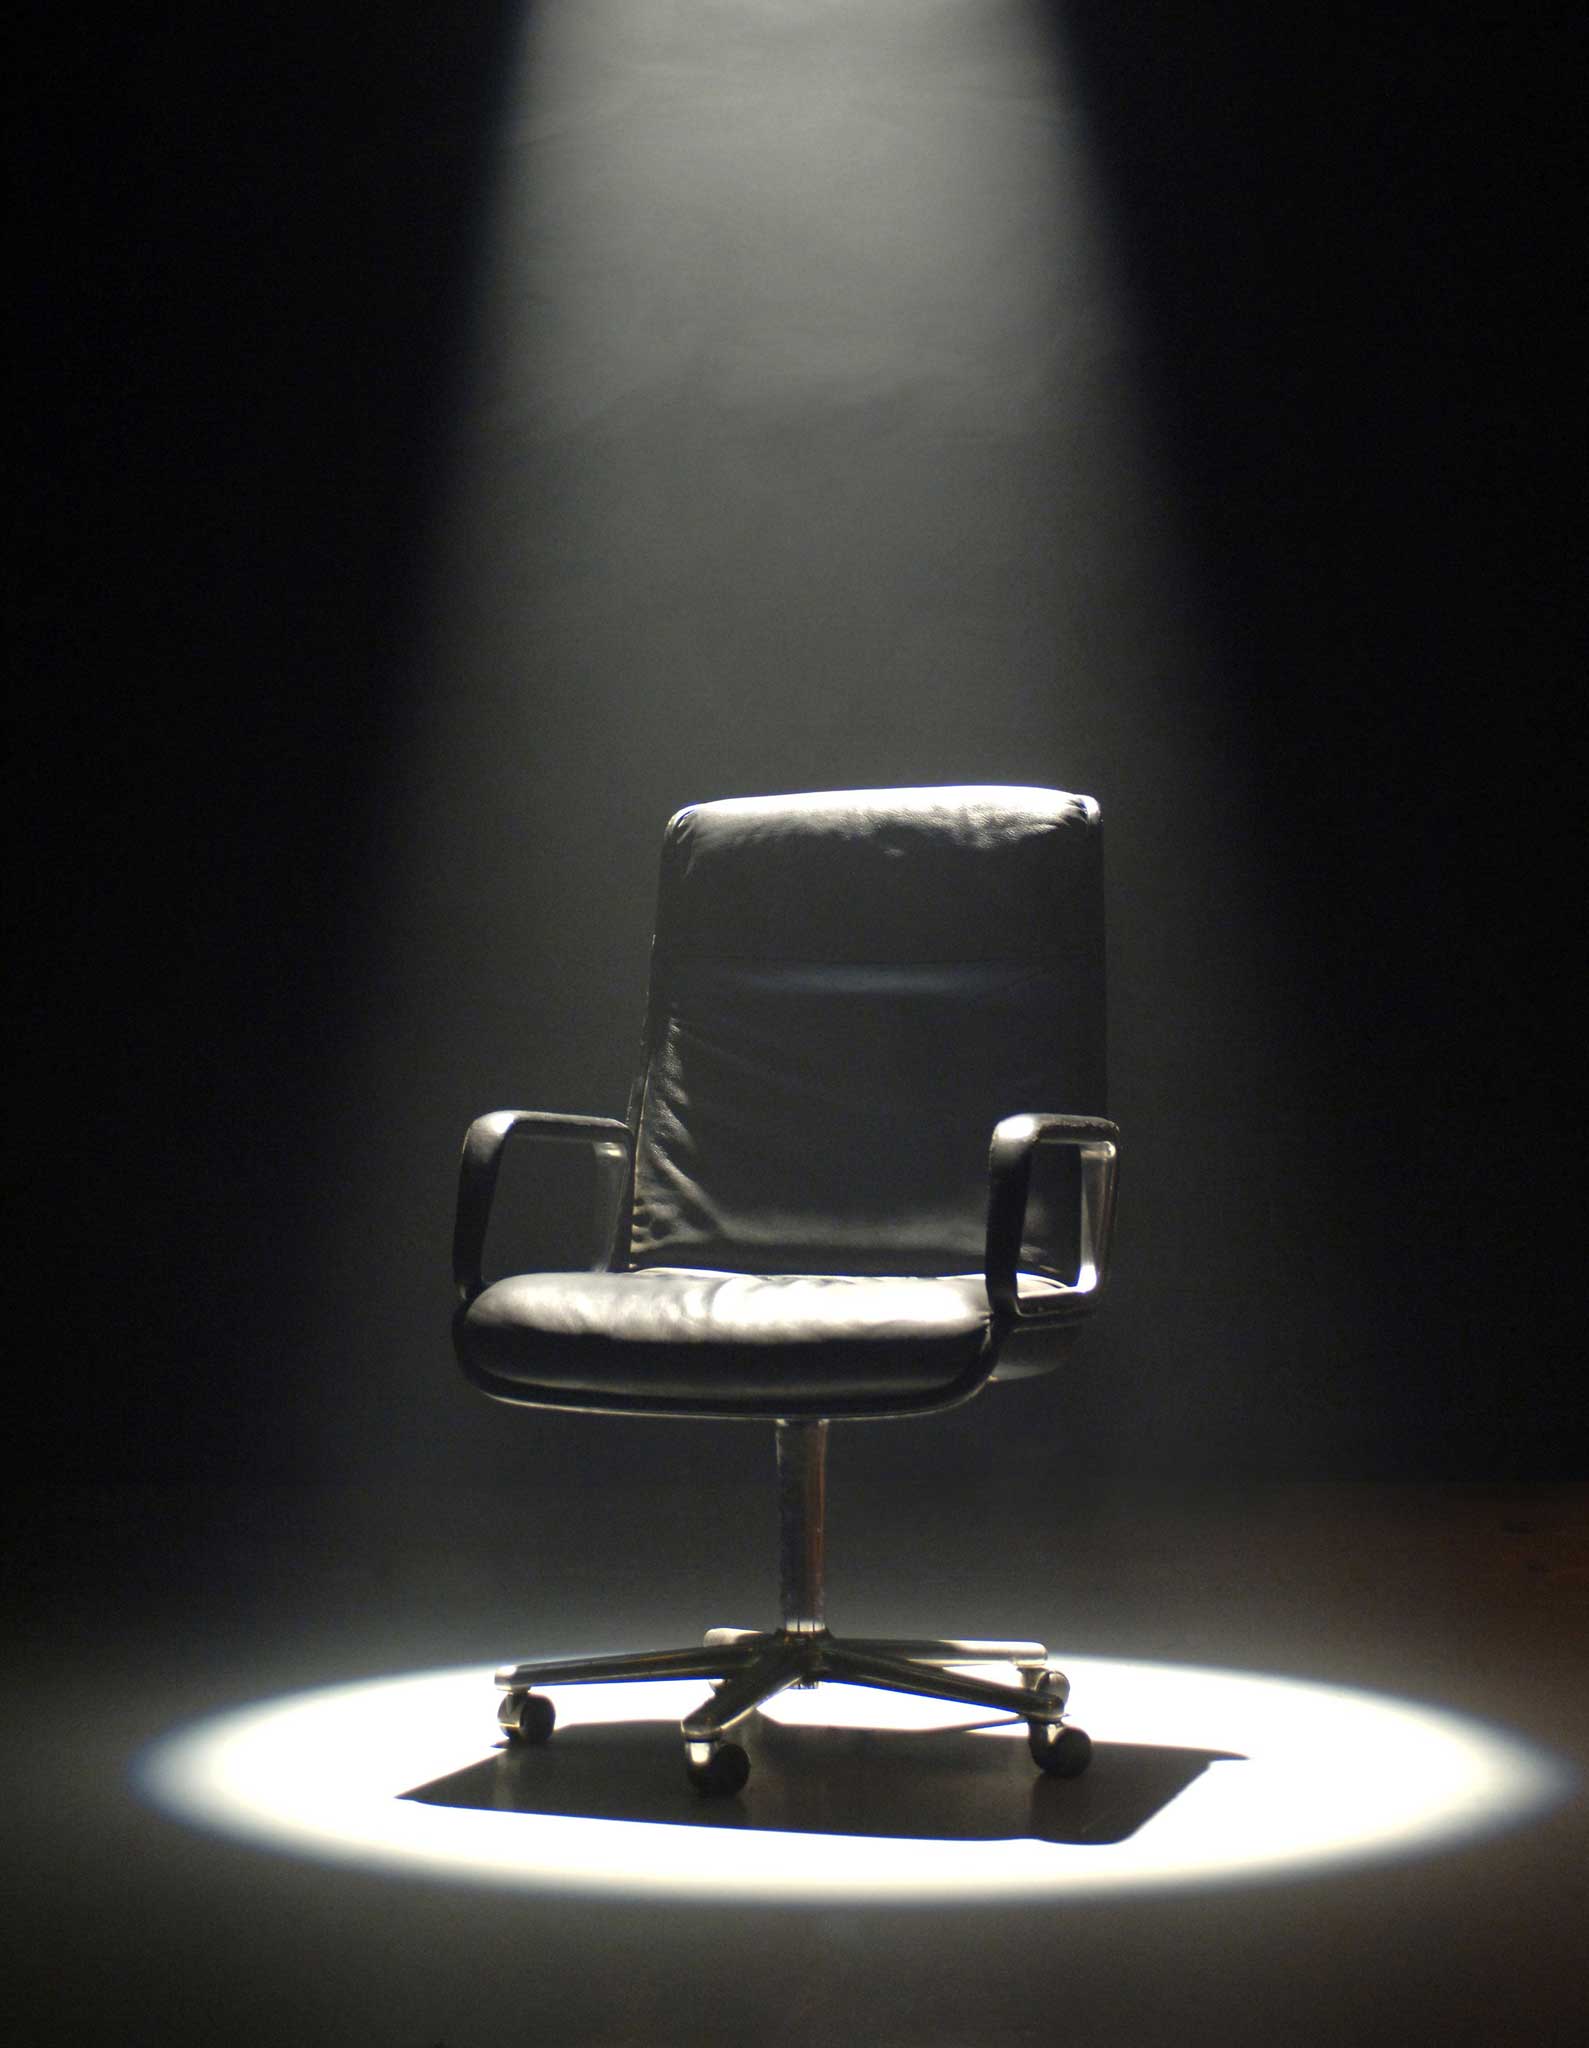 Rhodri Marsden's Interesting Objects: The Mastermind chair